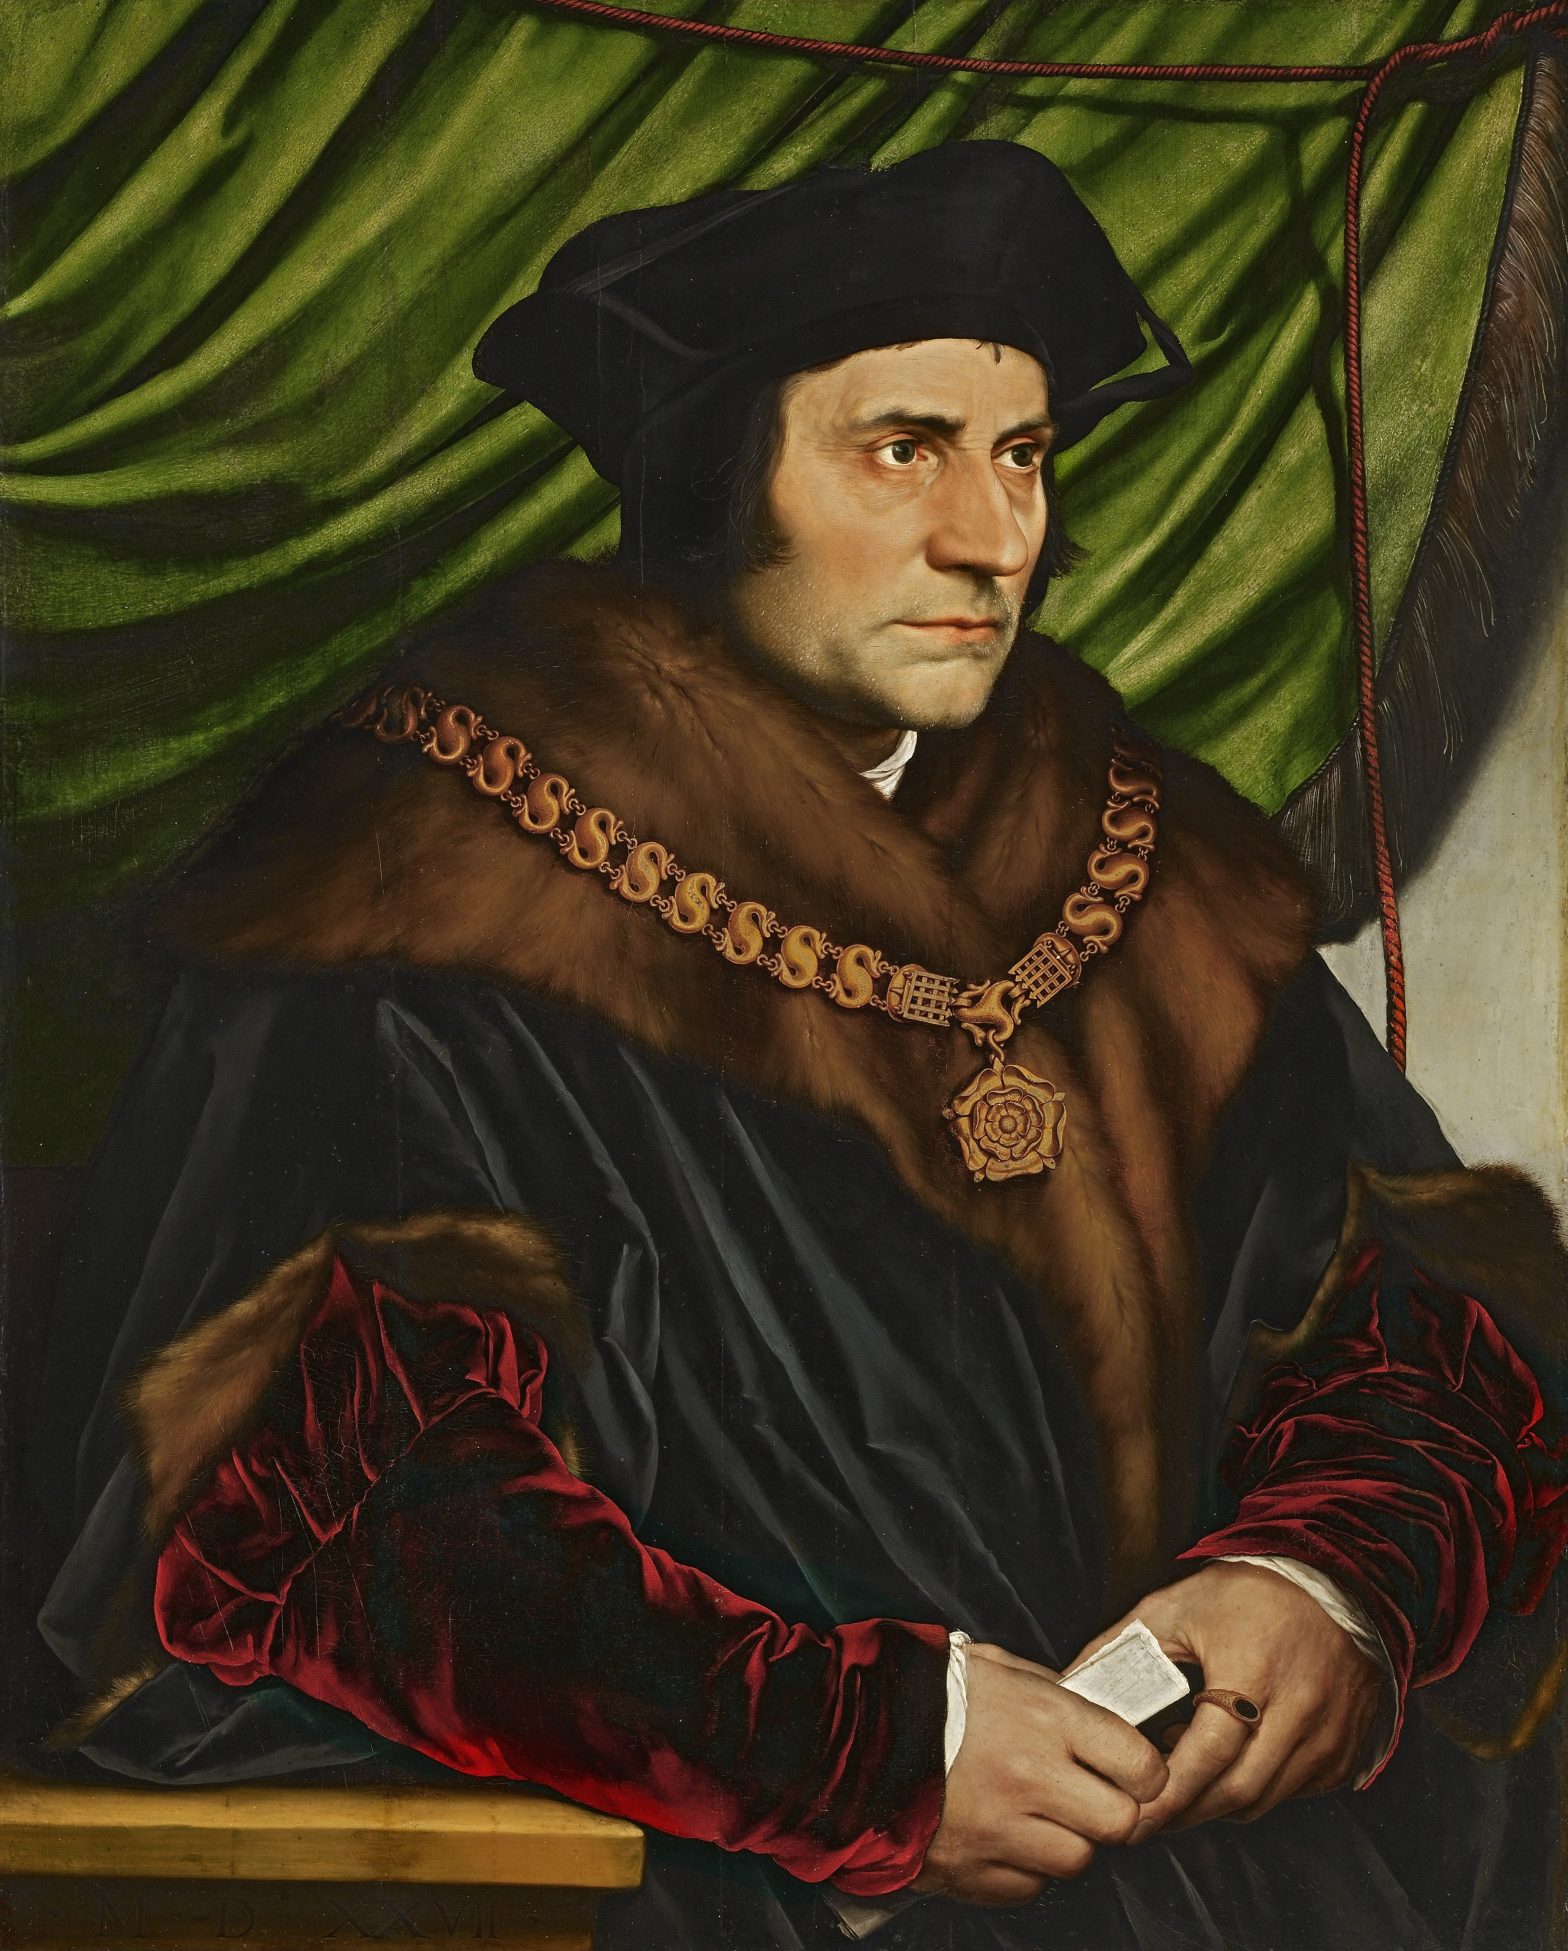 De Hans Holbein el Joven, Dominio público, https://commons.wikimedia.org/w/index.php?curid=13466190